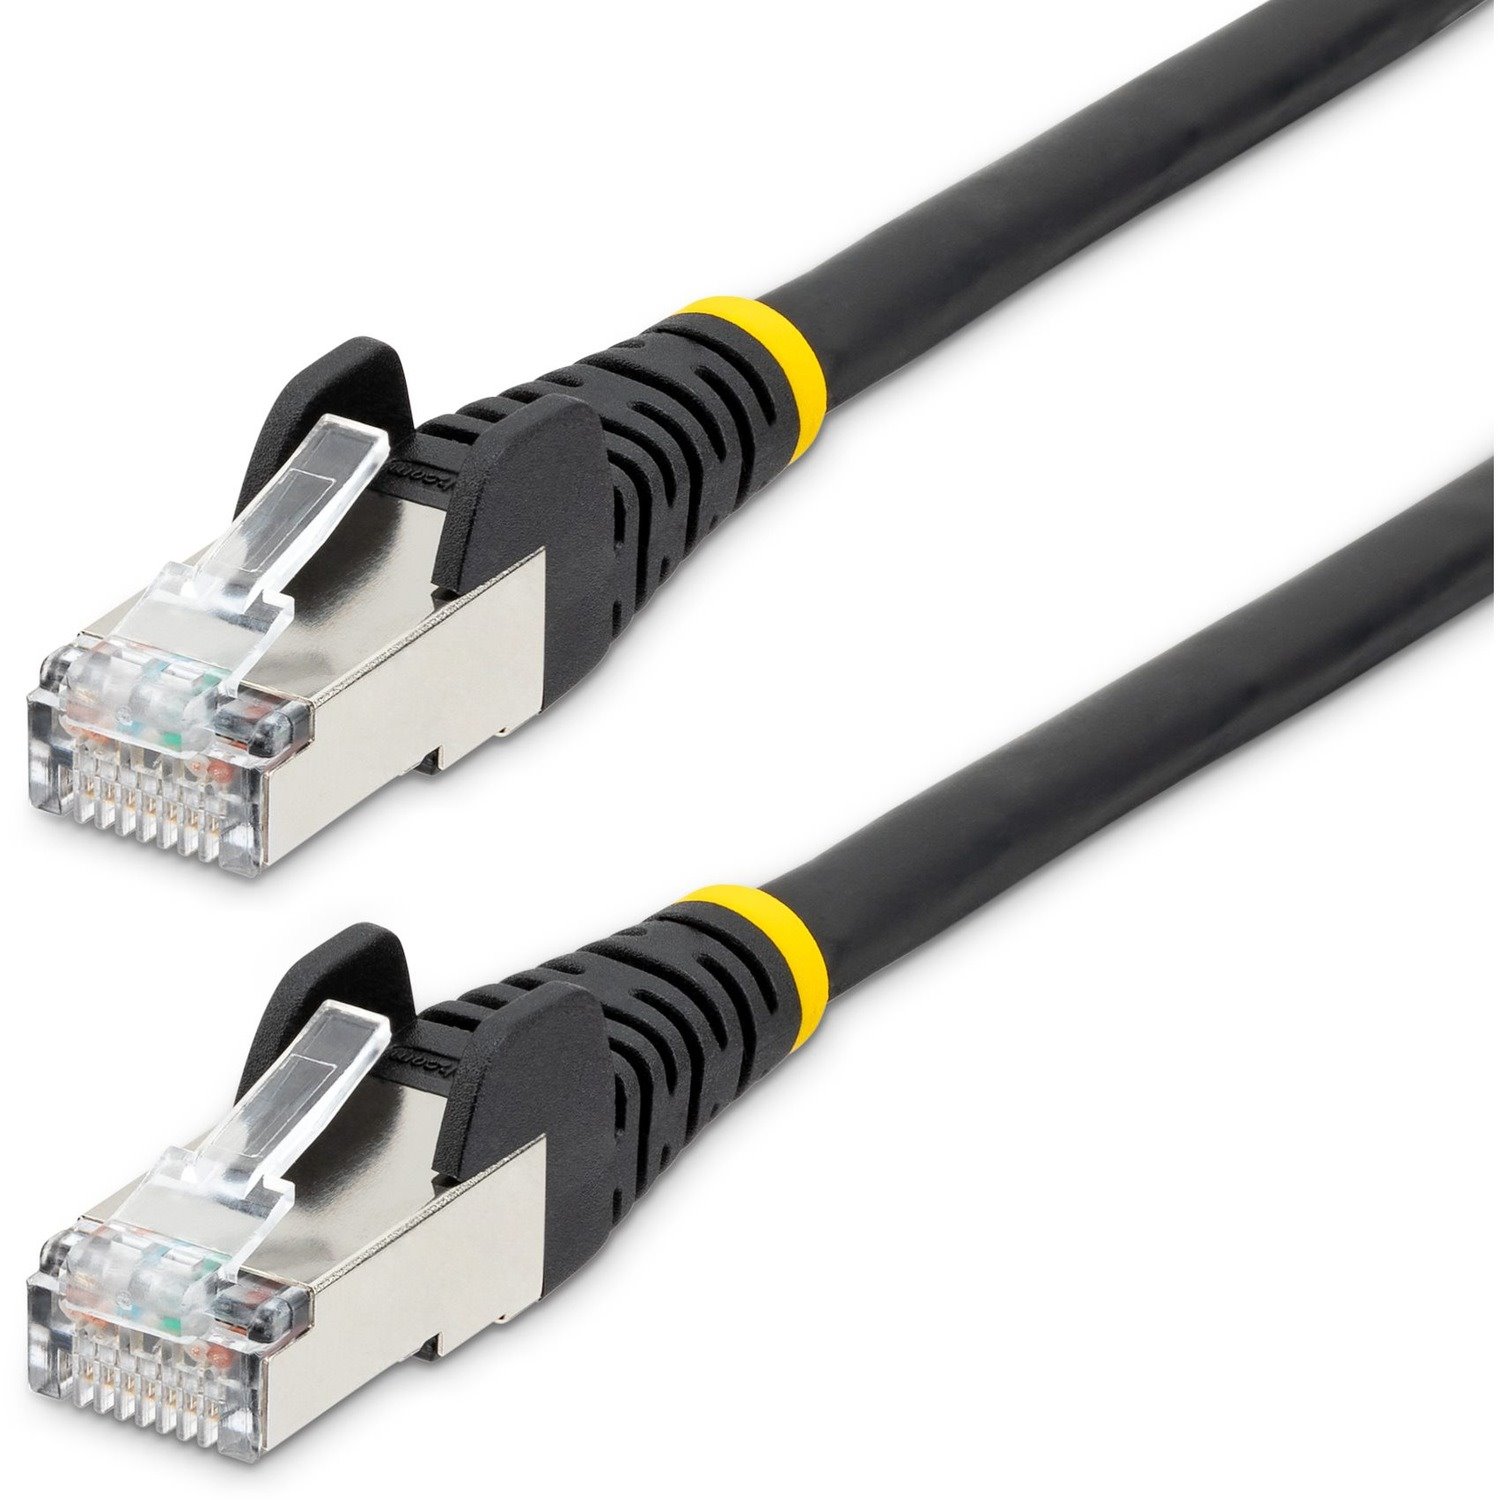 StarTech.com 7m CAT6a Ethernet Cable, Black Low Smoke Zero Halogen (LSZH) 10 GbE 100W PoE S/FTP Snagless RJ-45 Network Patch Cord